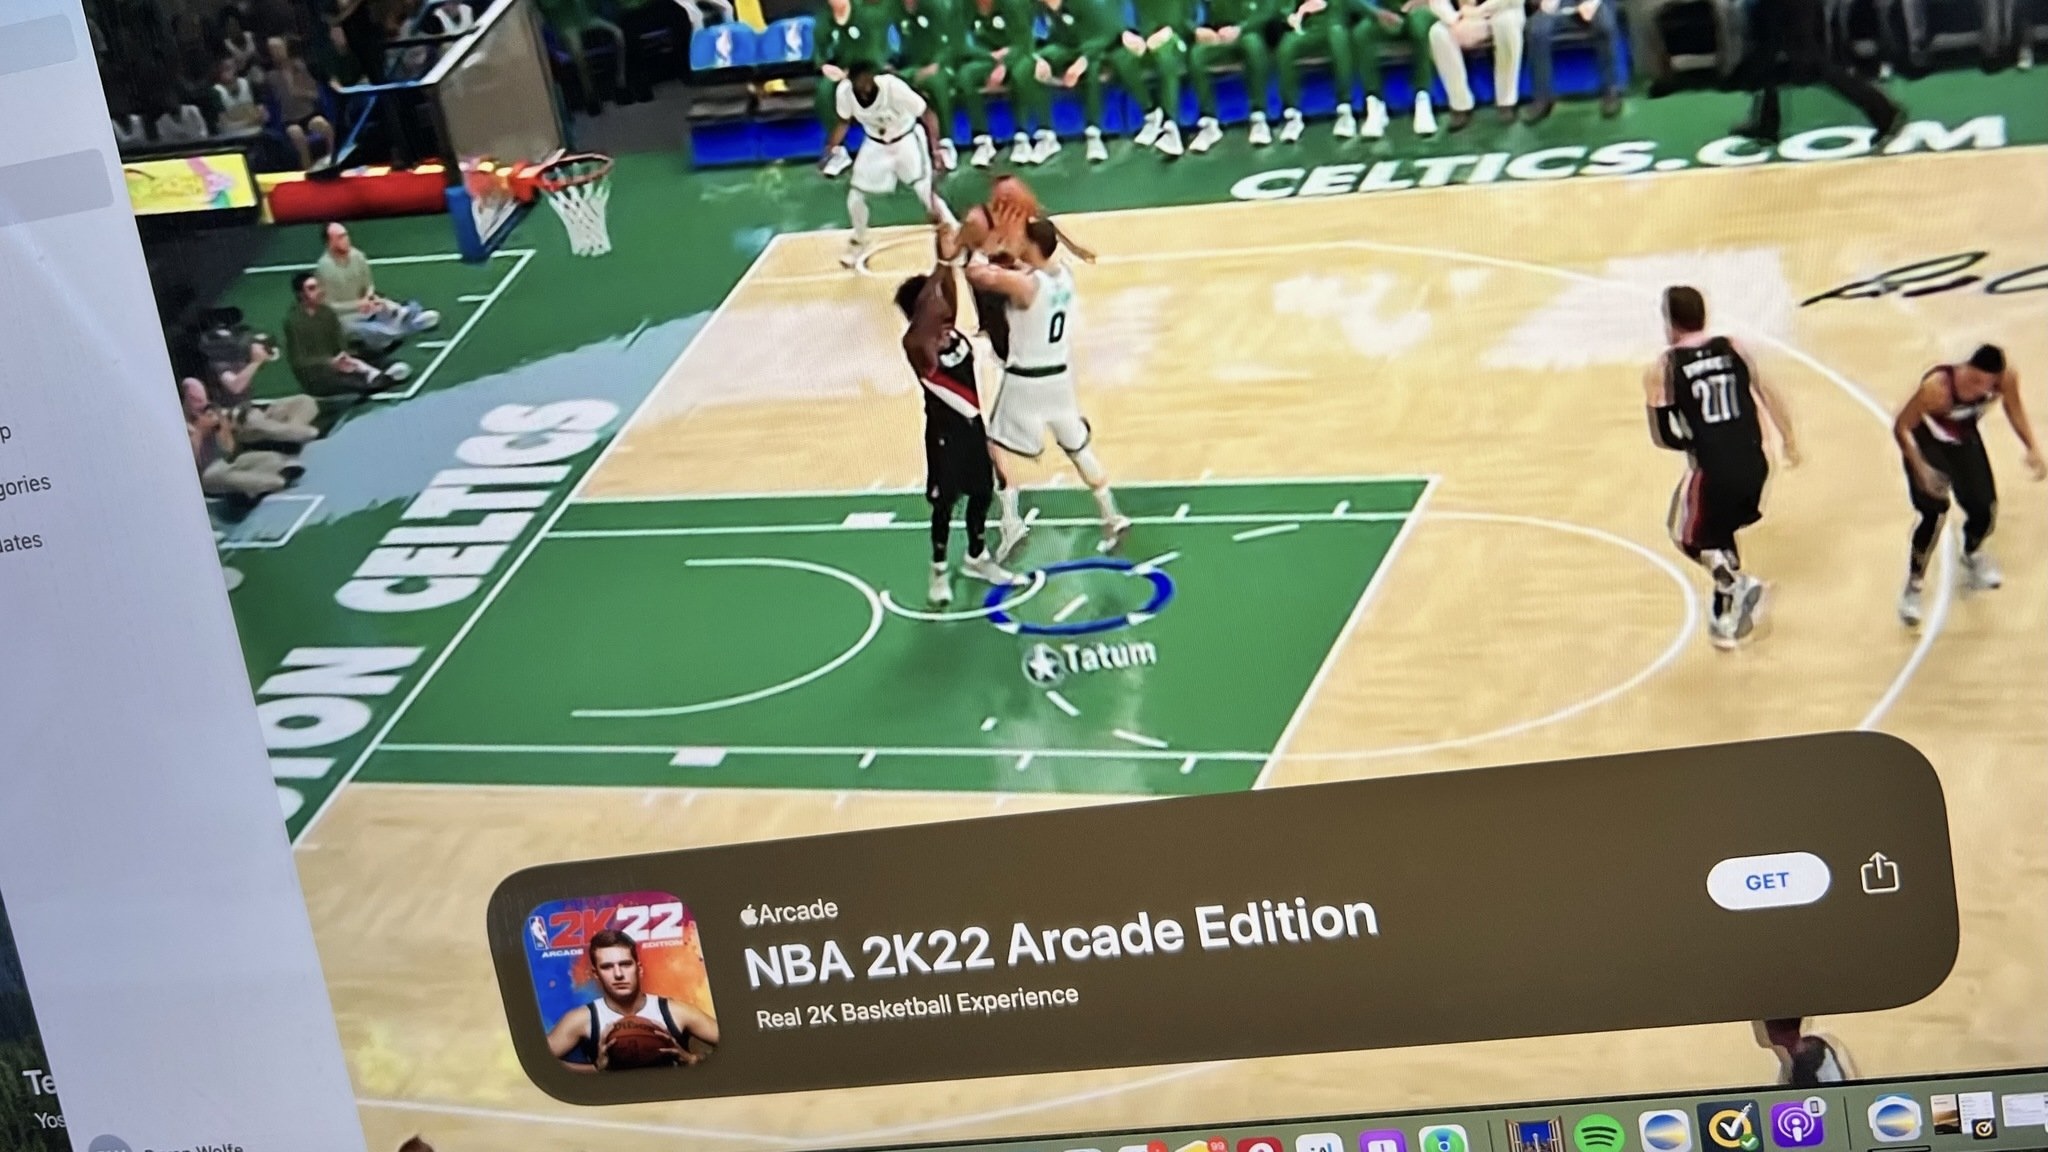 UNIS To Tha Net - Arcade Basket Ball Game with LCD Screen – Maxx Grab